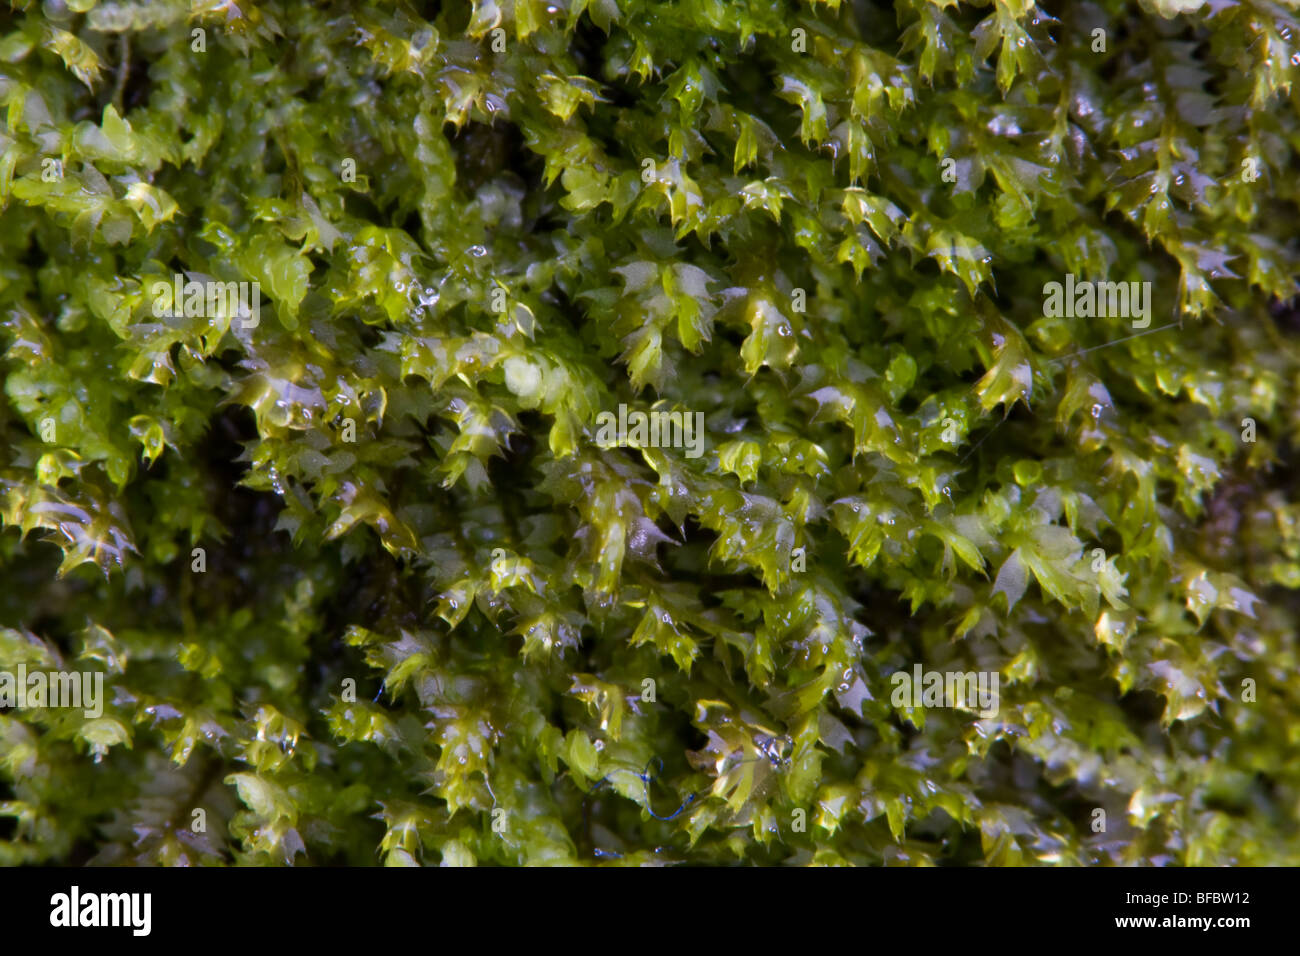 Spotty Featherwort, Plagiochyla punctata Stock Photo